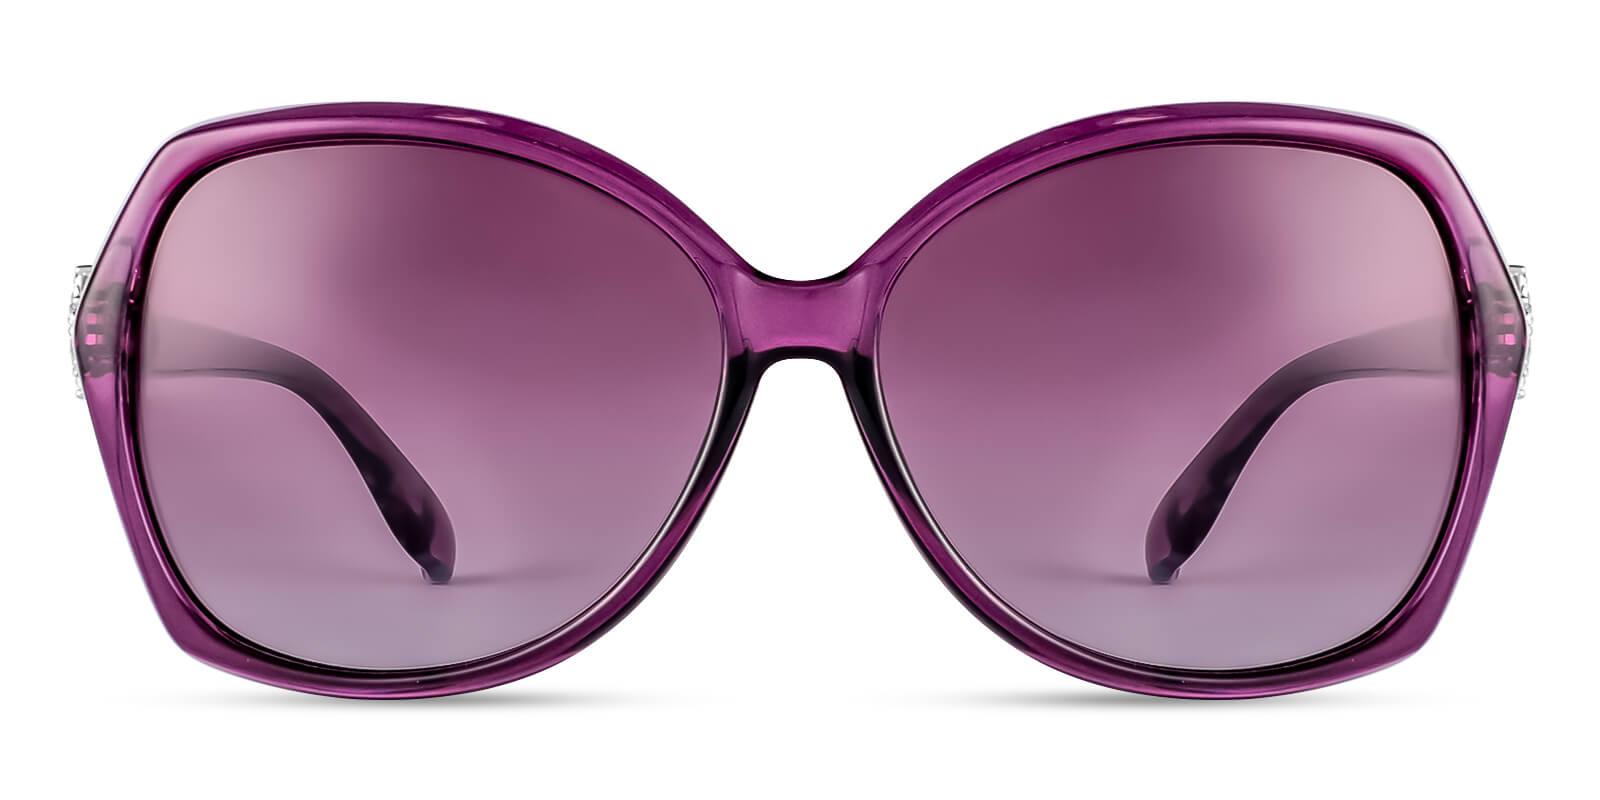 Fly Purple TR Sunglasses , UniversalBridgeFit Frames from ABBE Glasses